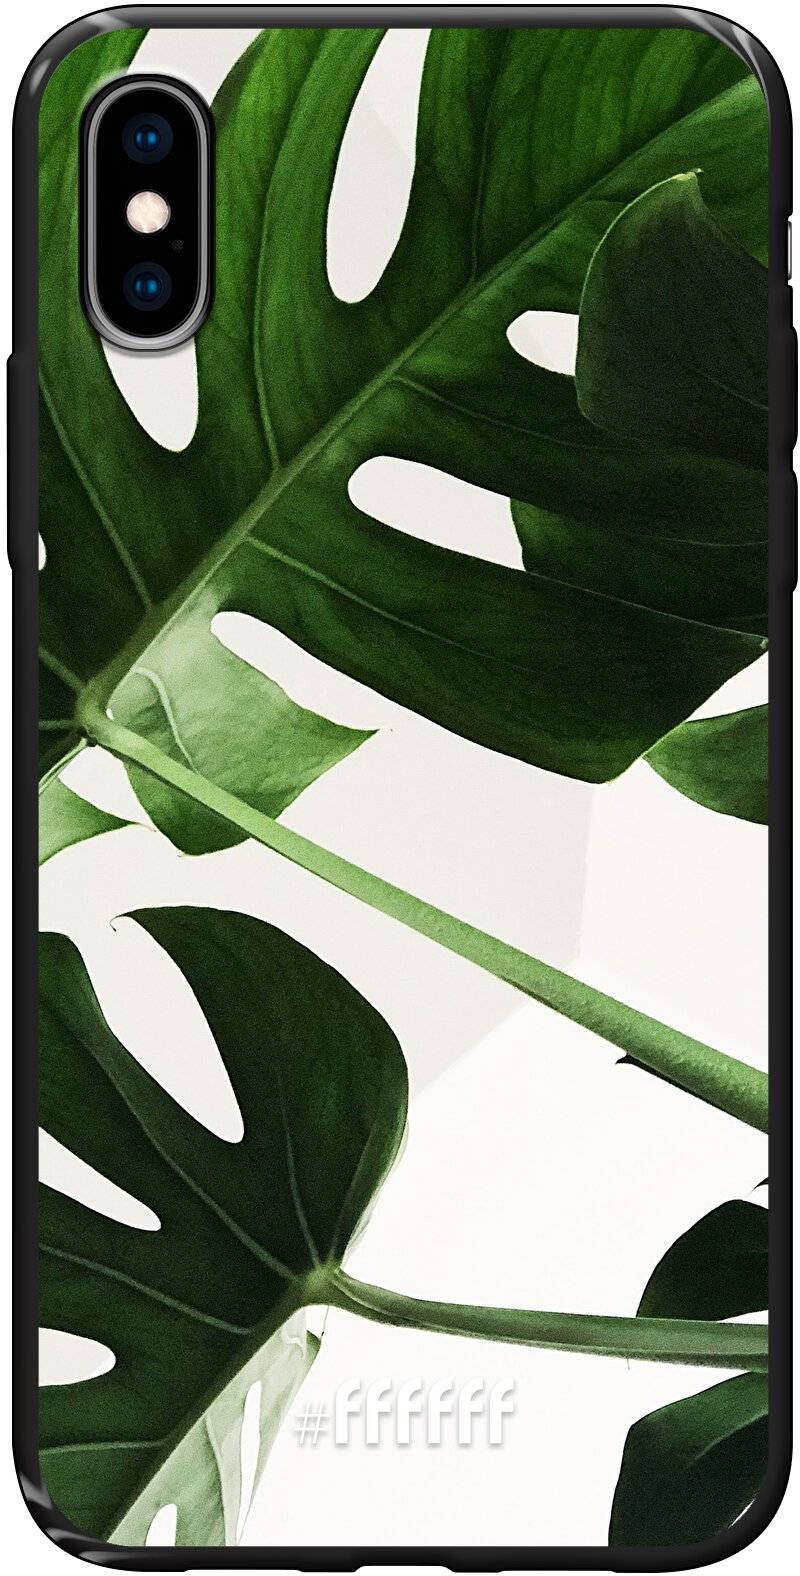 Tropical Plants iPhone X